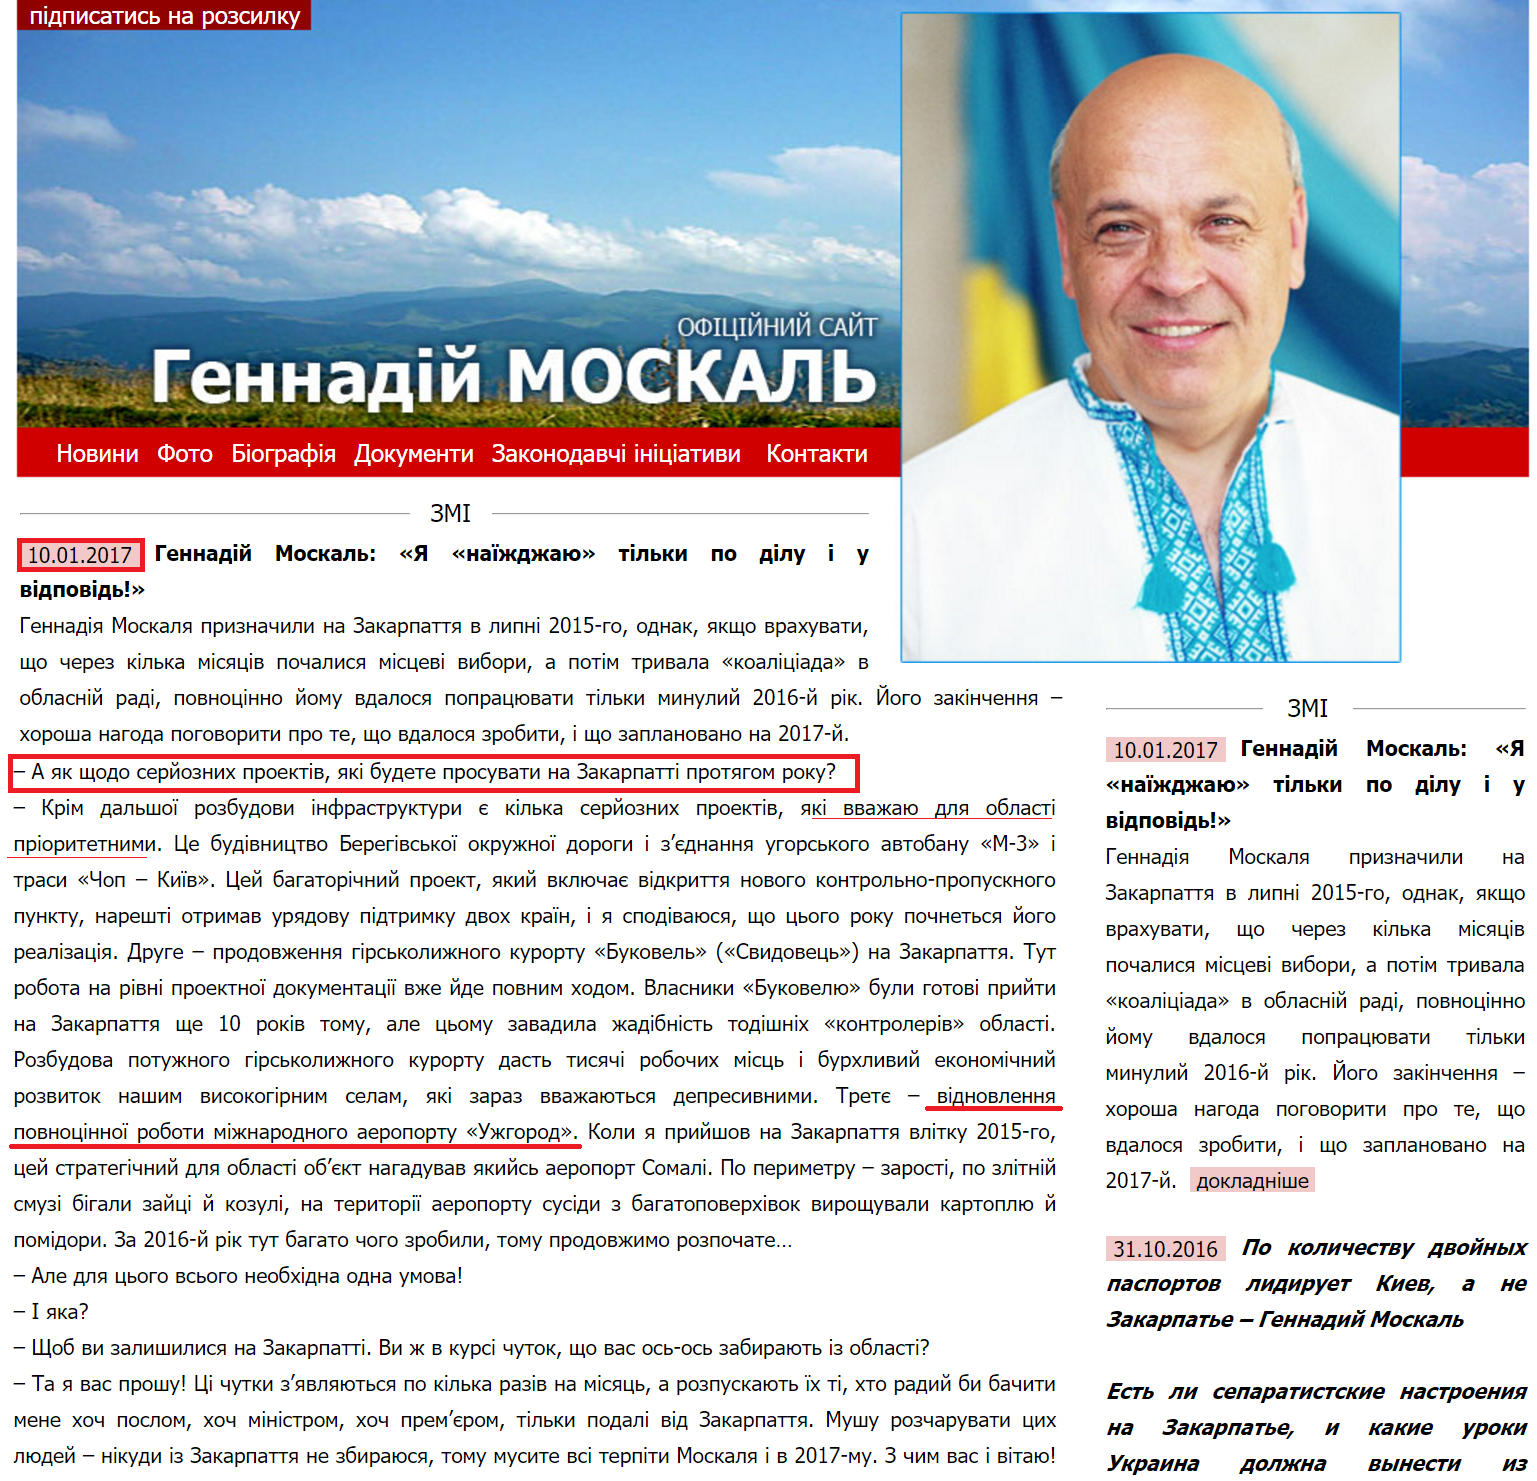 http://moskal.in.ua/index.php?loc=zmi&news_id=2602